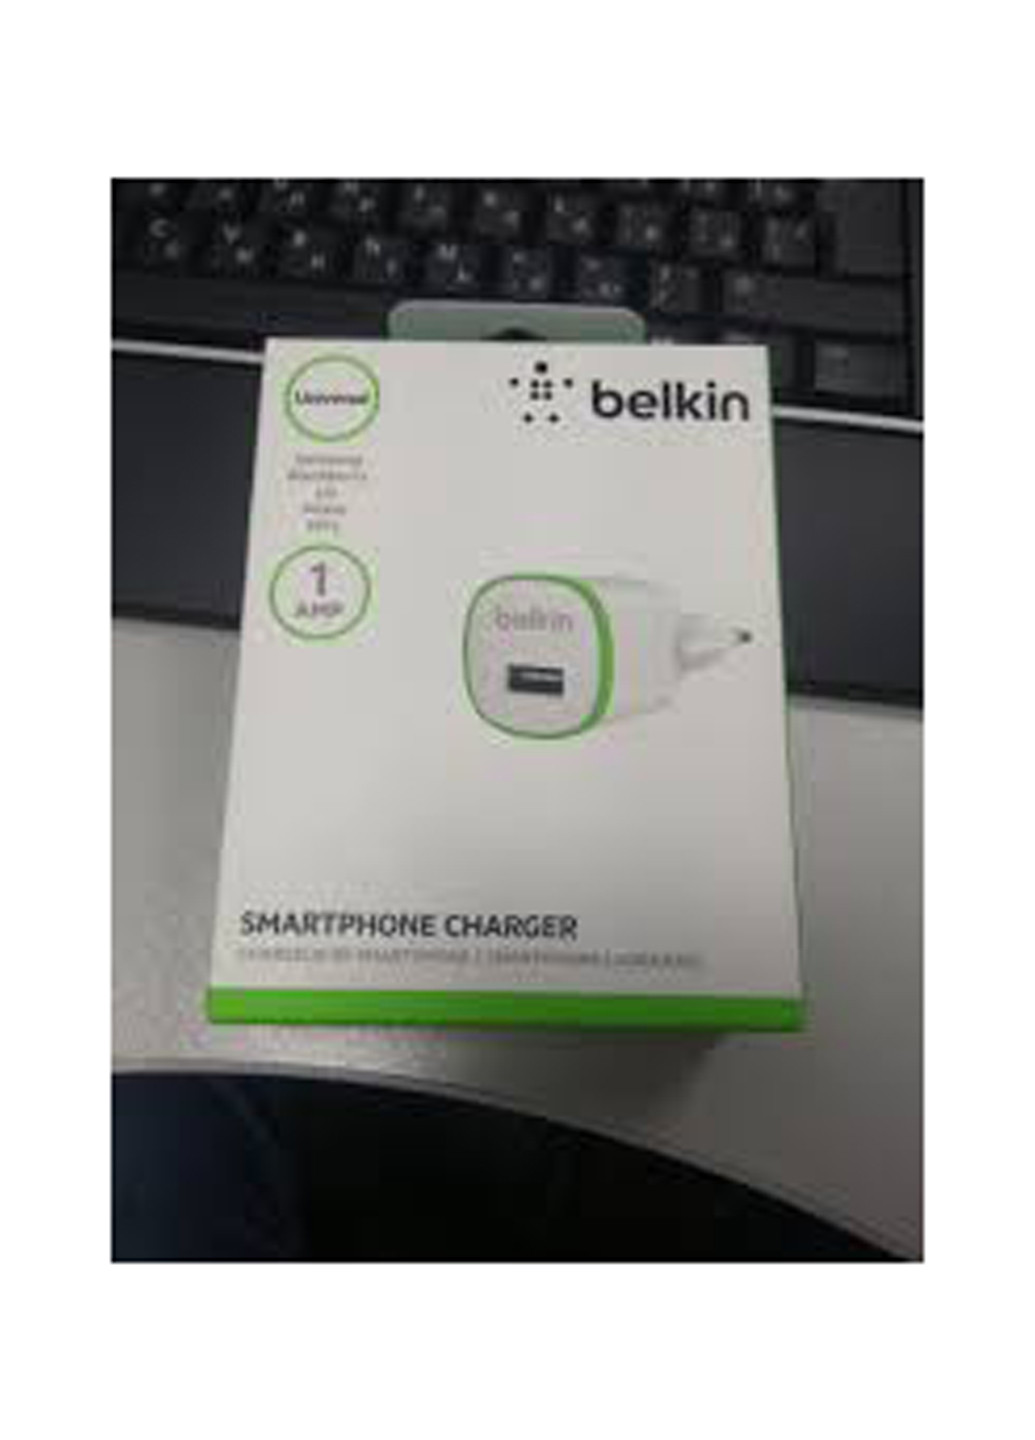 Сетевое ЗУ Belkin USB HomeCharger (USB 1A ), UNI, 5V, White (F8J013vfWHT) белое